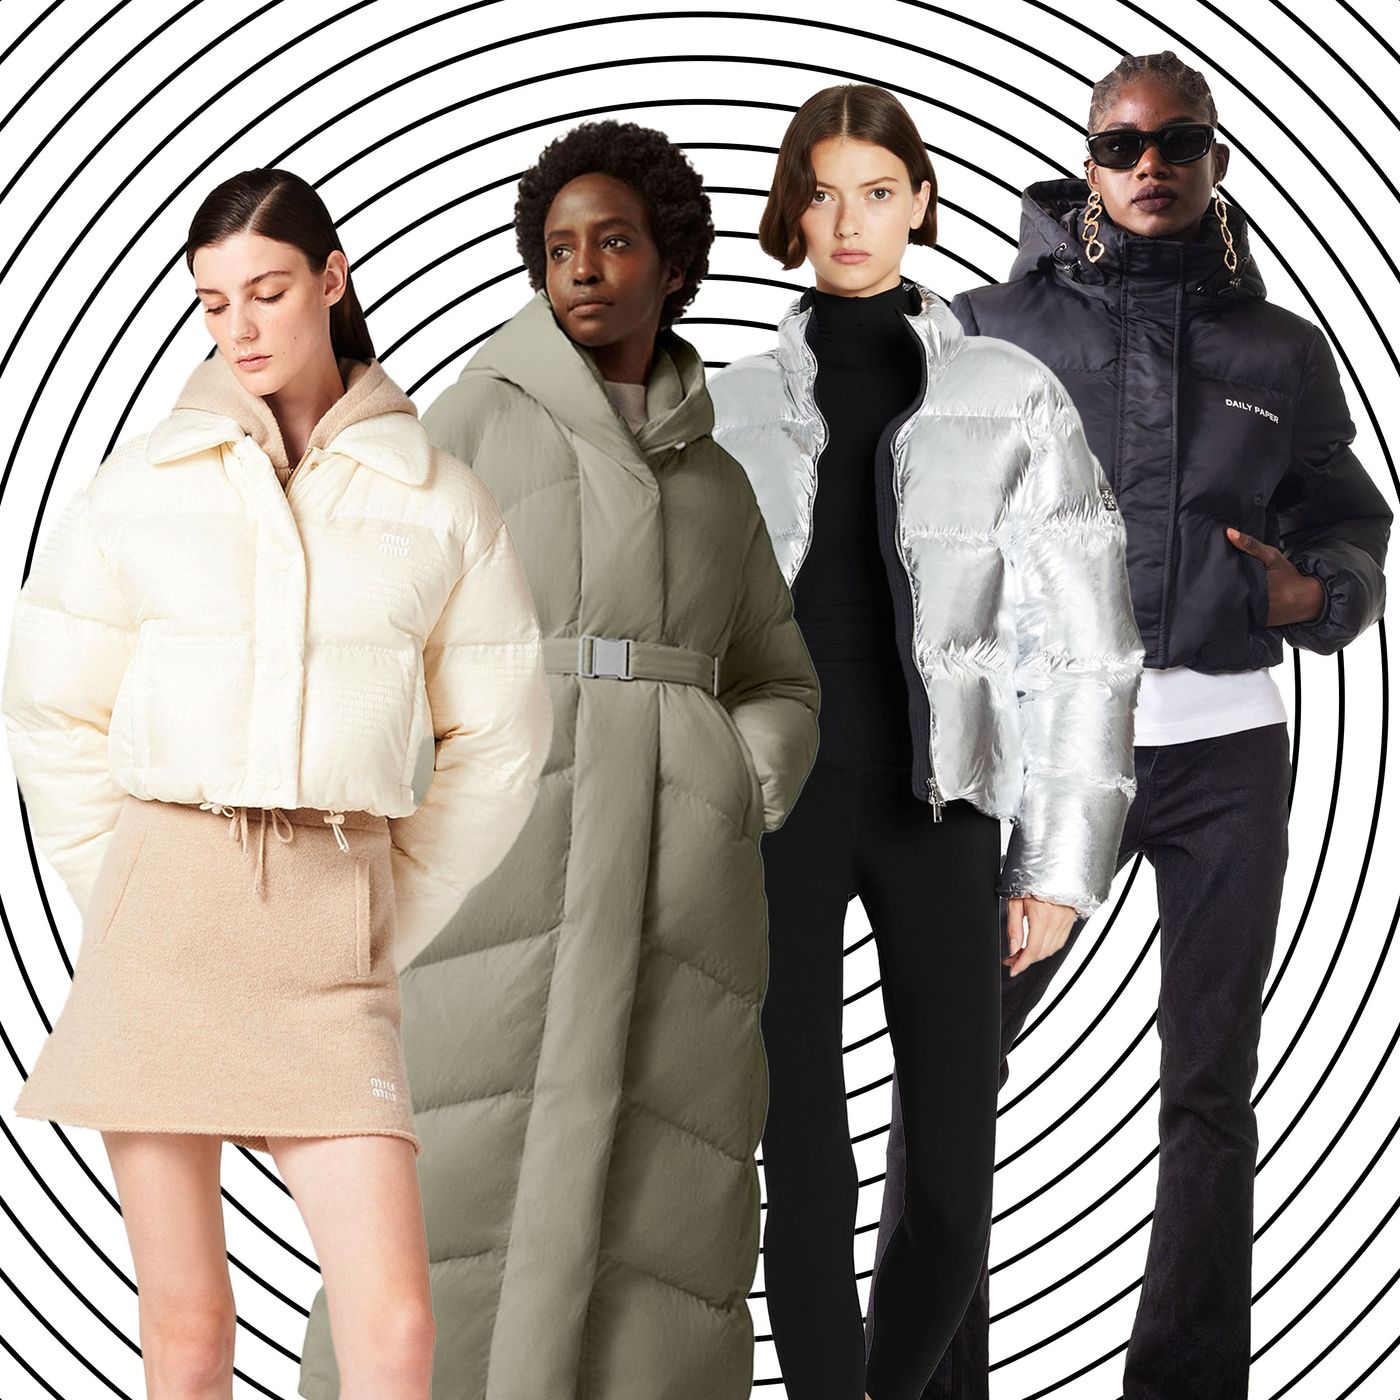 Women's Jackets, Shop Women's Winter Coats